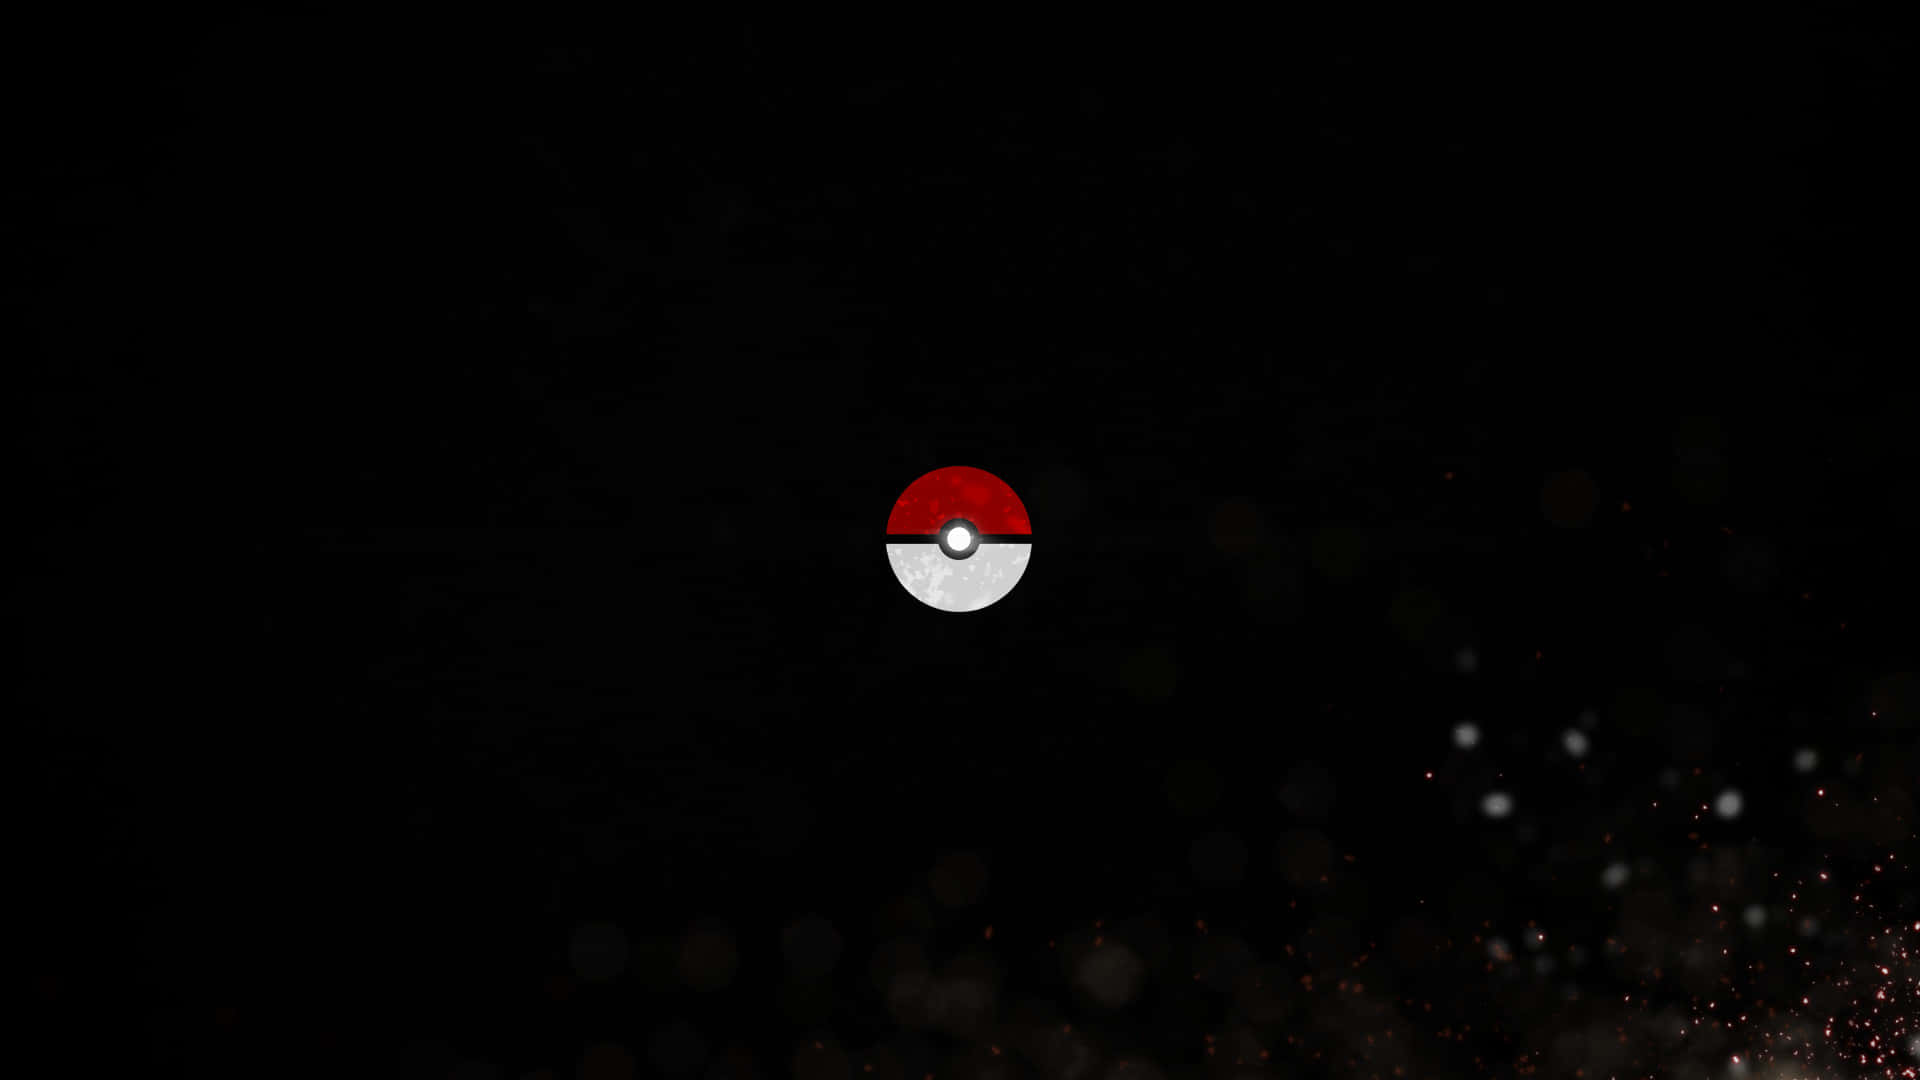 Stunning Pokeball Wallpaper for Pokémon enthusiasts